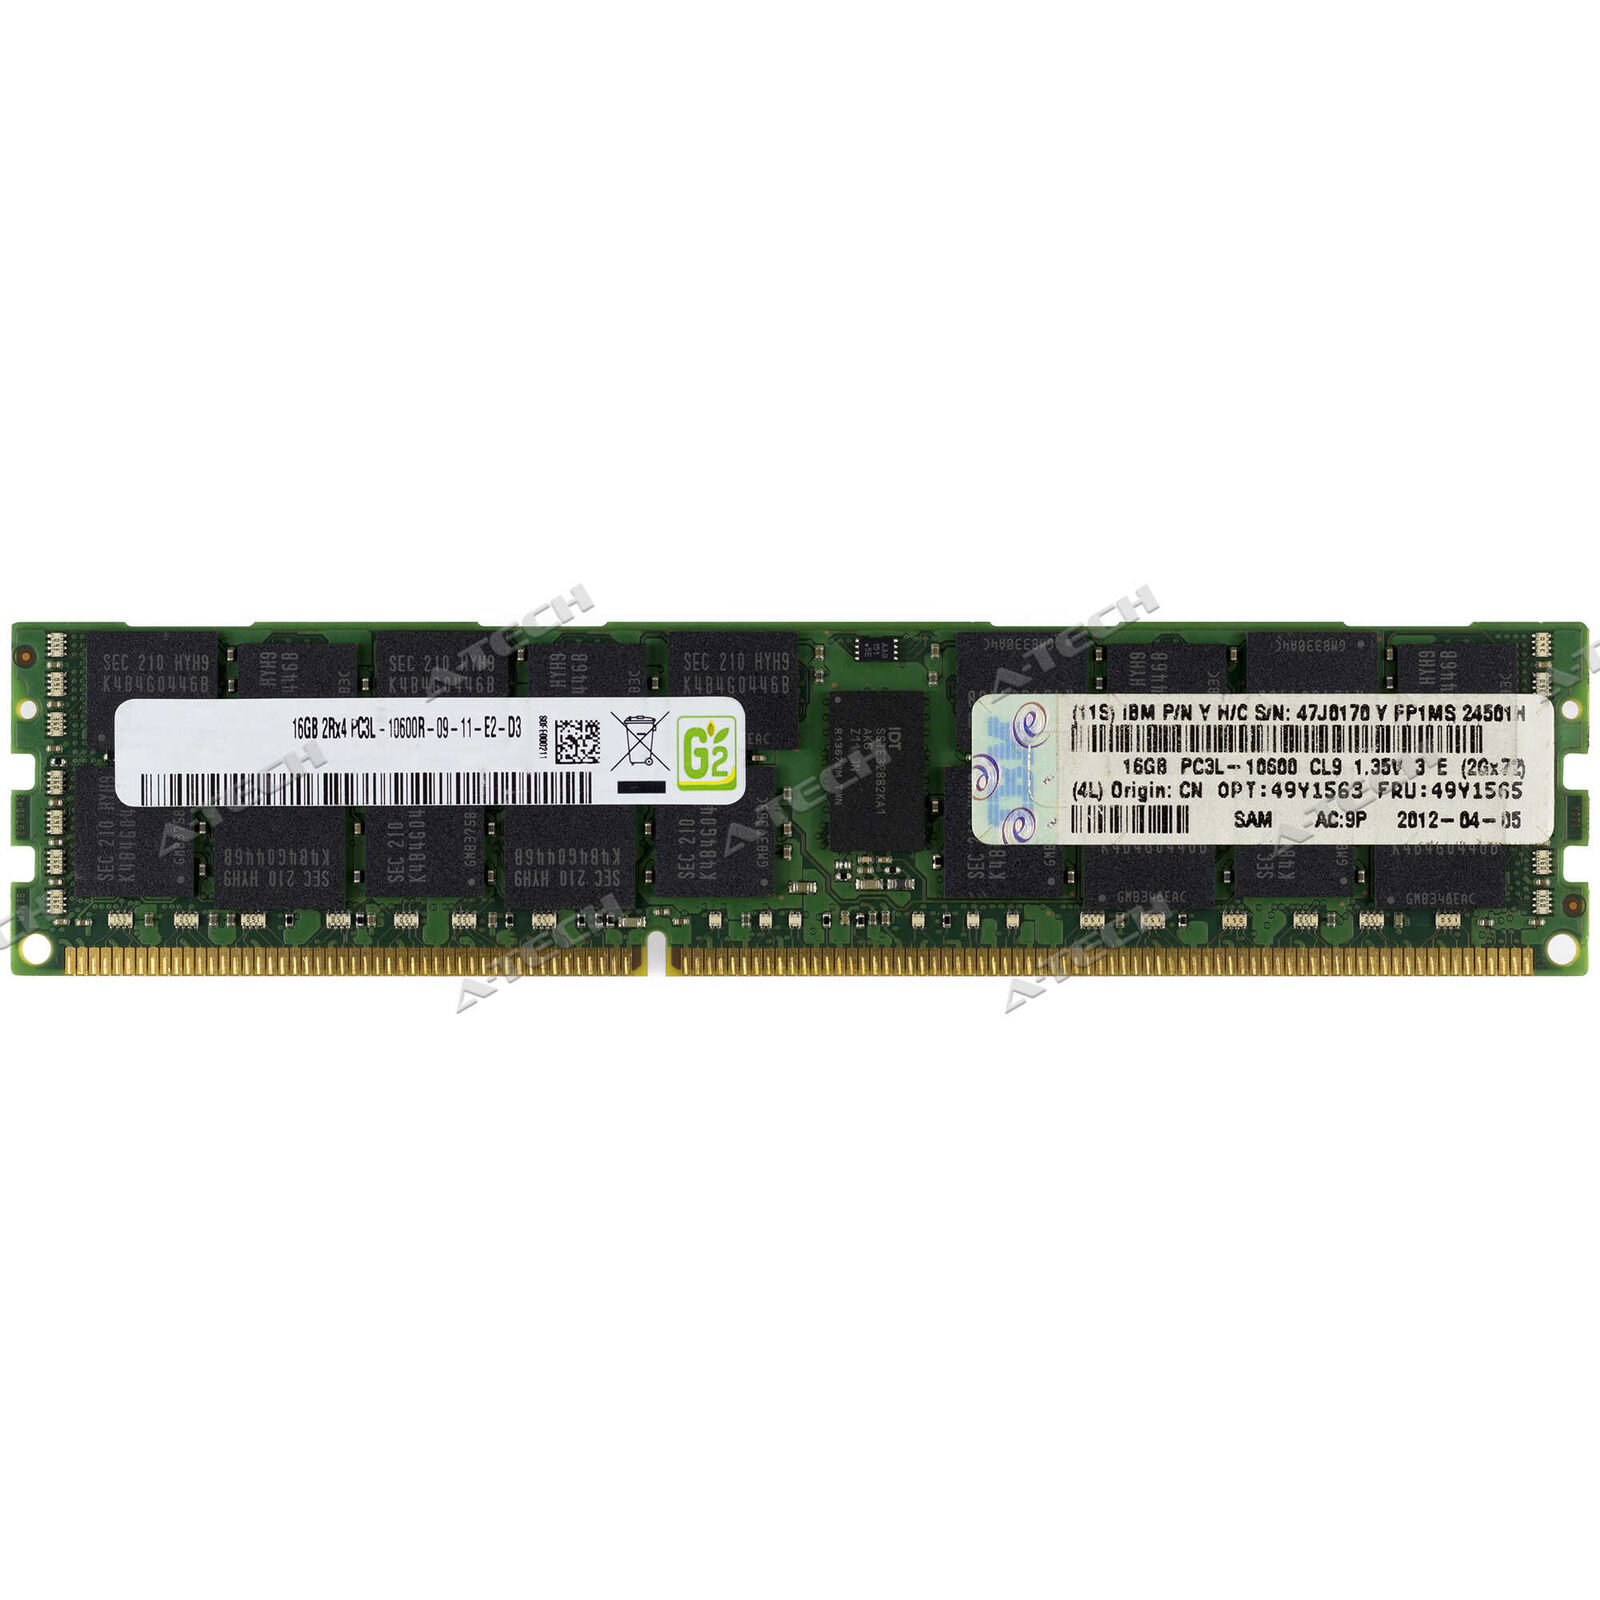 IBM-Lenovo 16GB DDR3L RDIMM 47J0170 49Y1562 49Y1563 49Y1565 Server Memory RAM